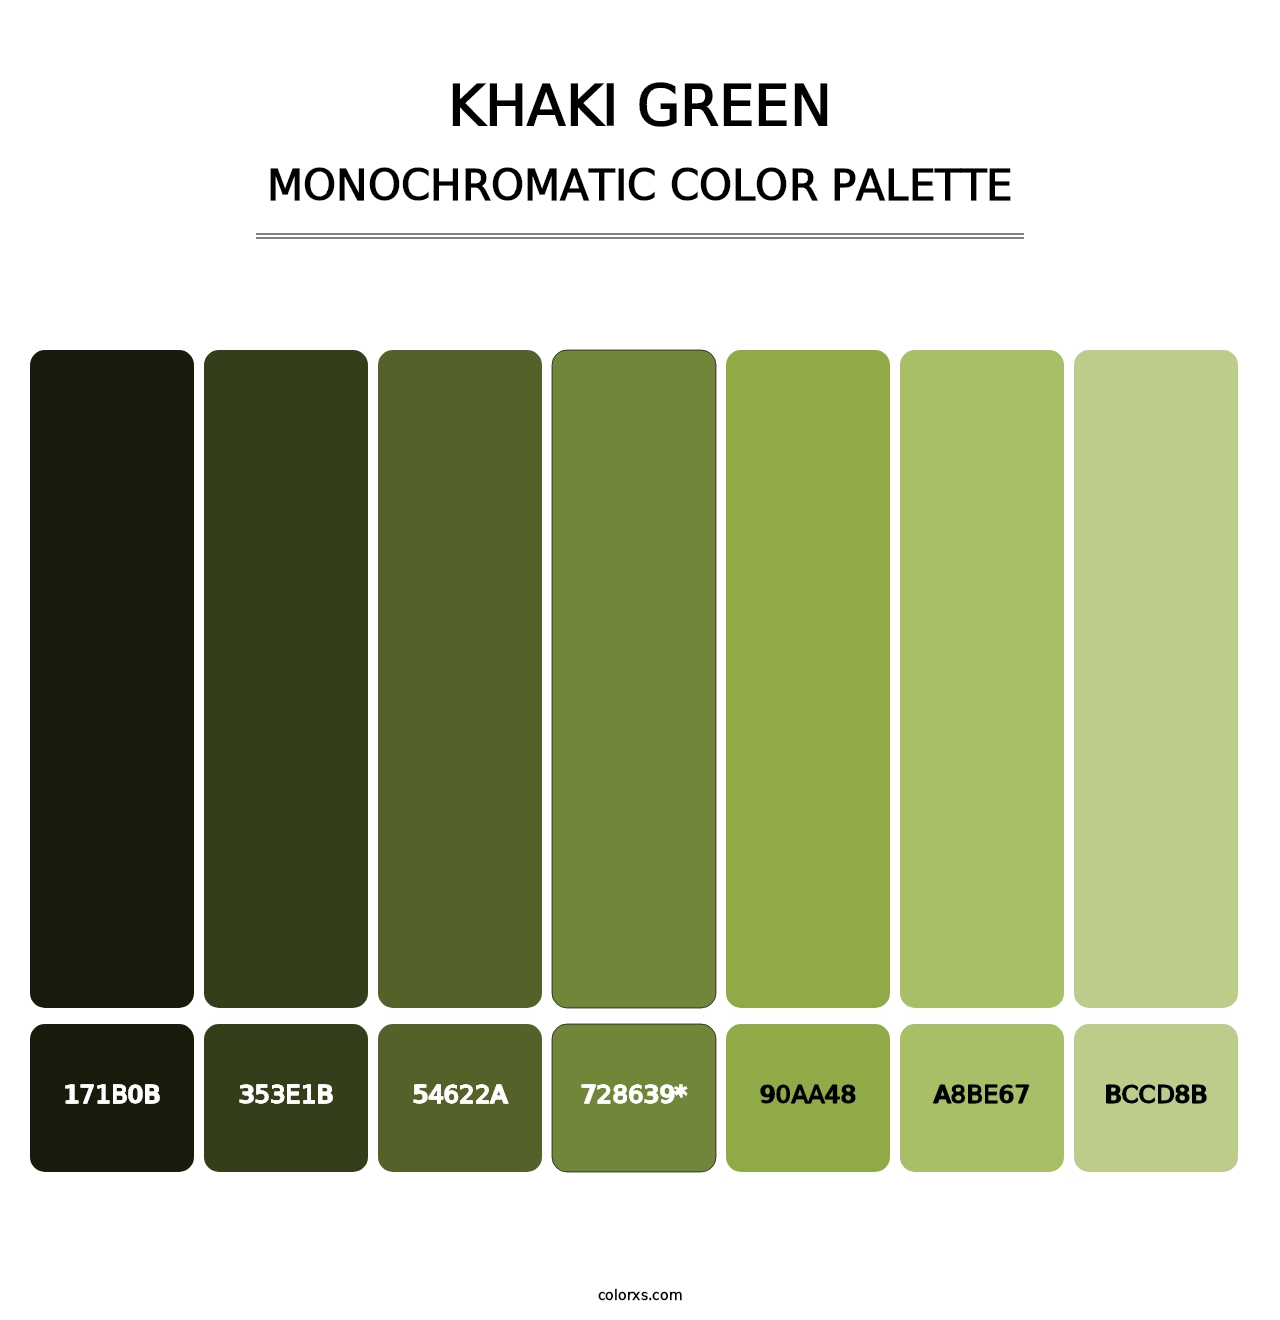 Khaki Green - Monochromatic Color Palette